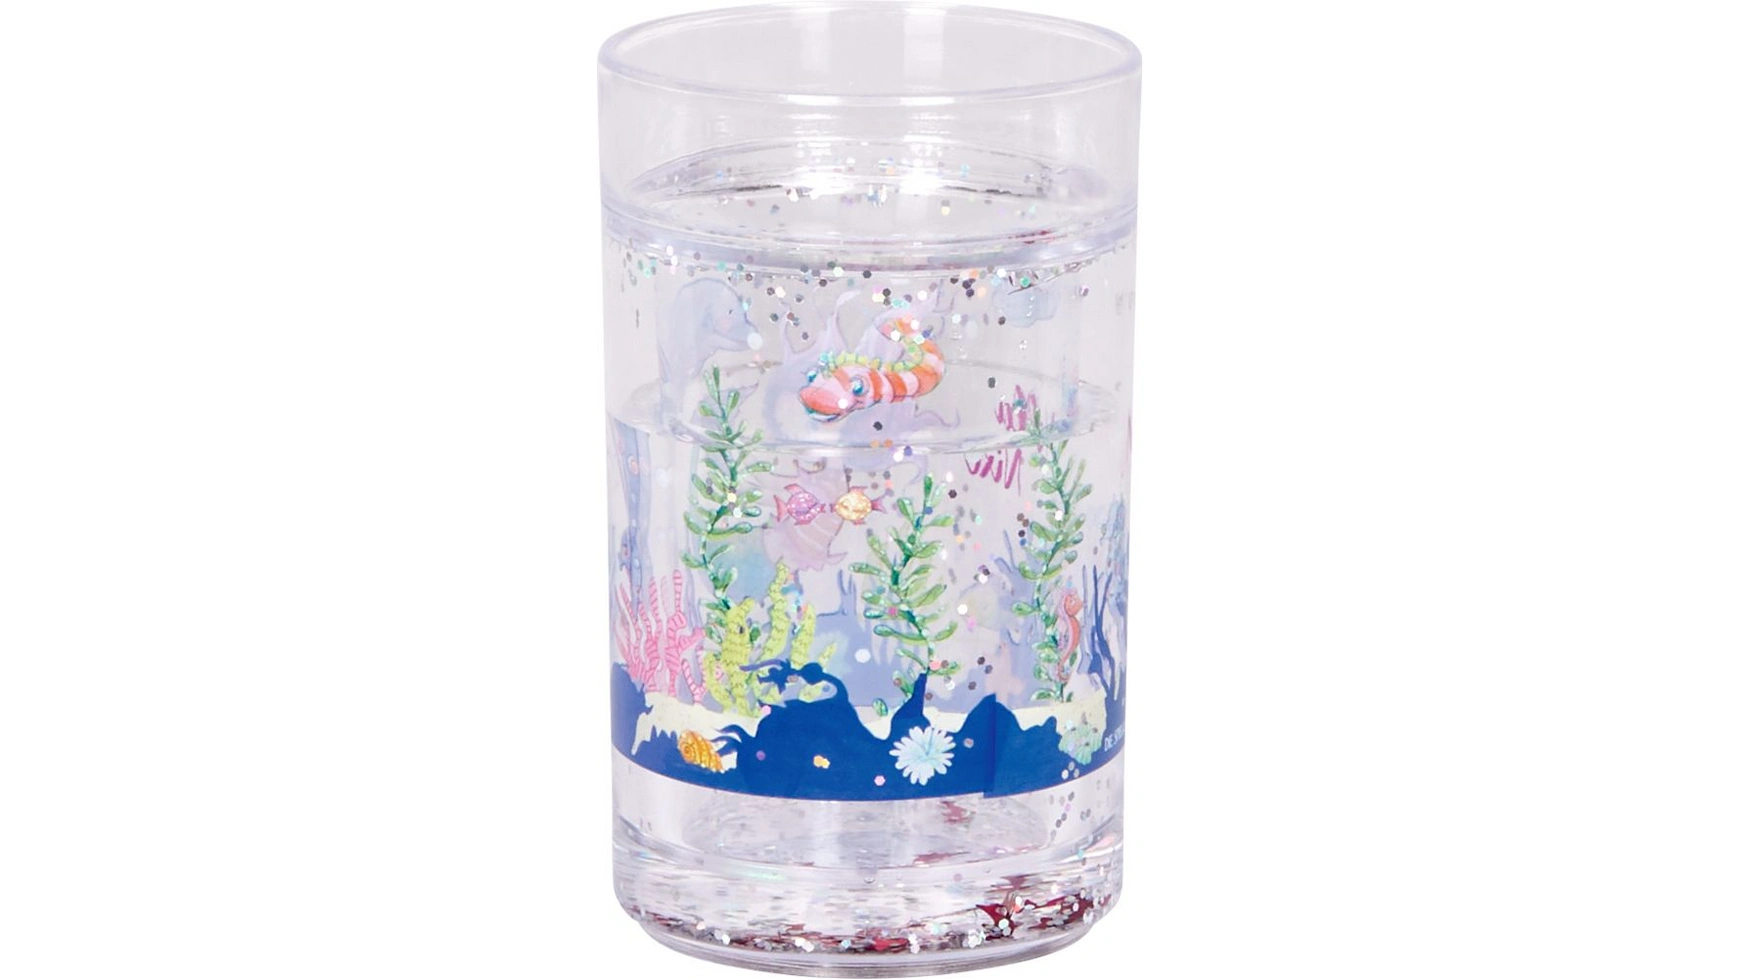 цена The Spiegelburg чашка с блестками и плавающими элементами Nella Nixe